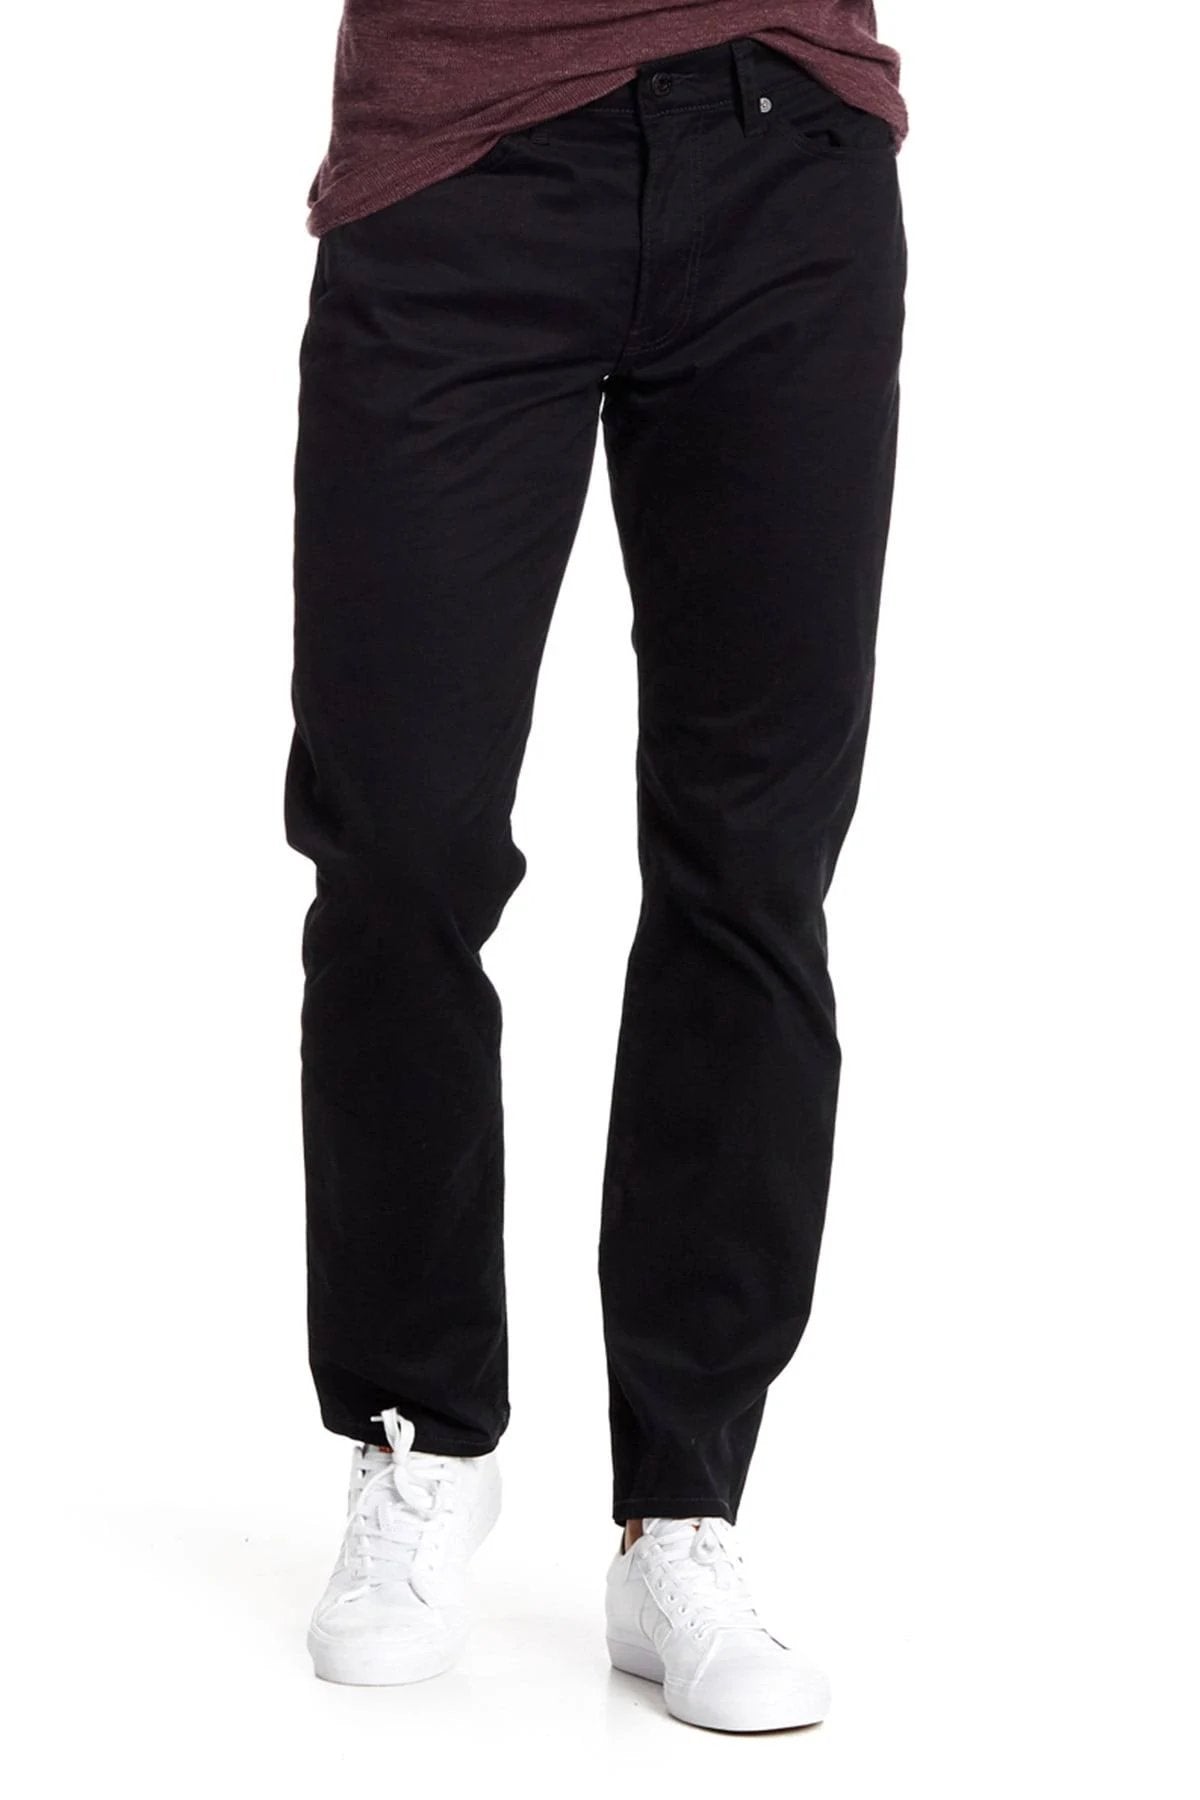 Lucky Brand Women's Five-pocket Styling Heritage Slim Fit Pants | Black - 32X30